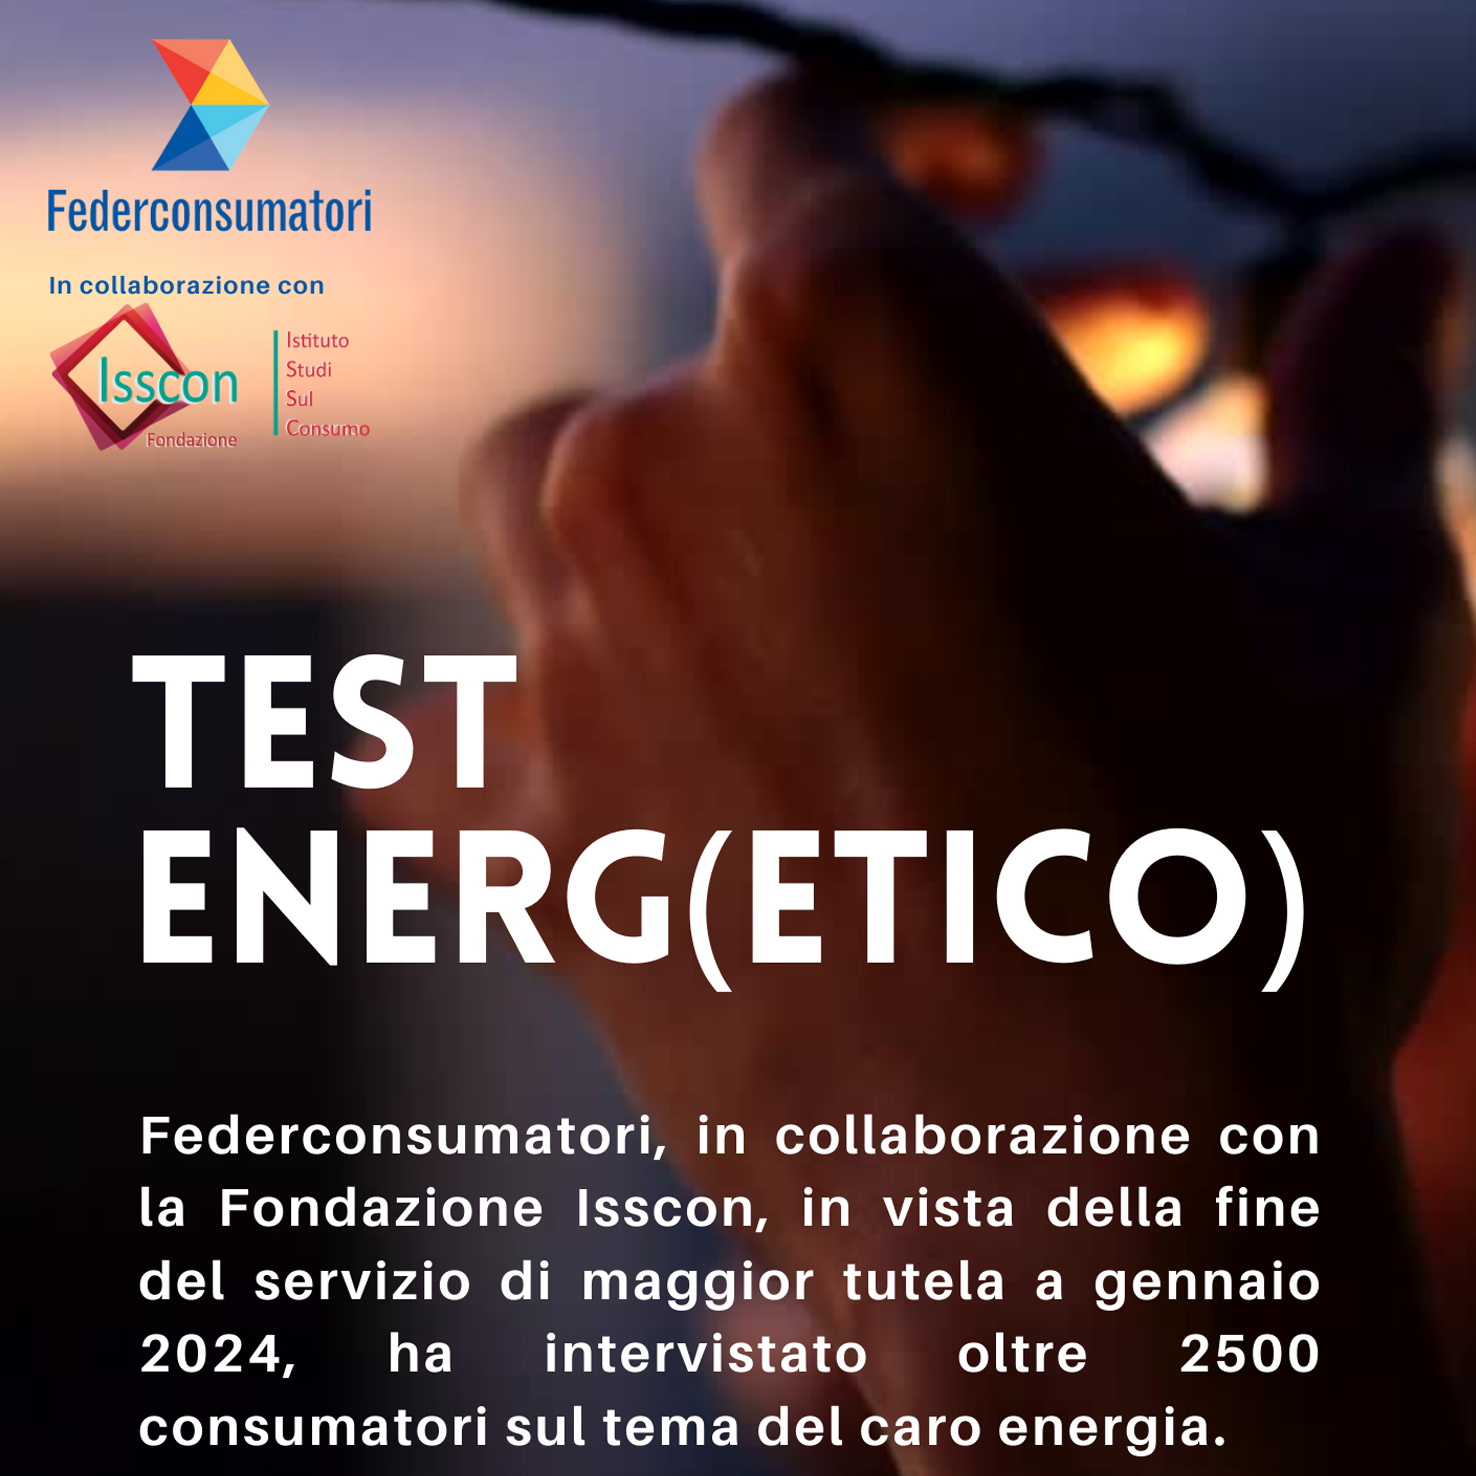 Test Energ(etico)